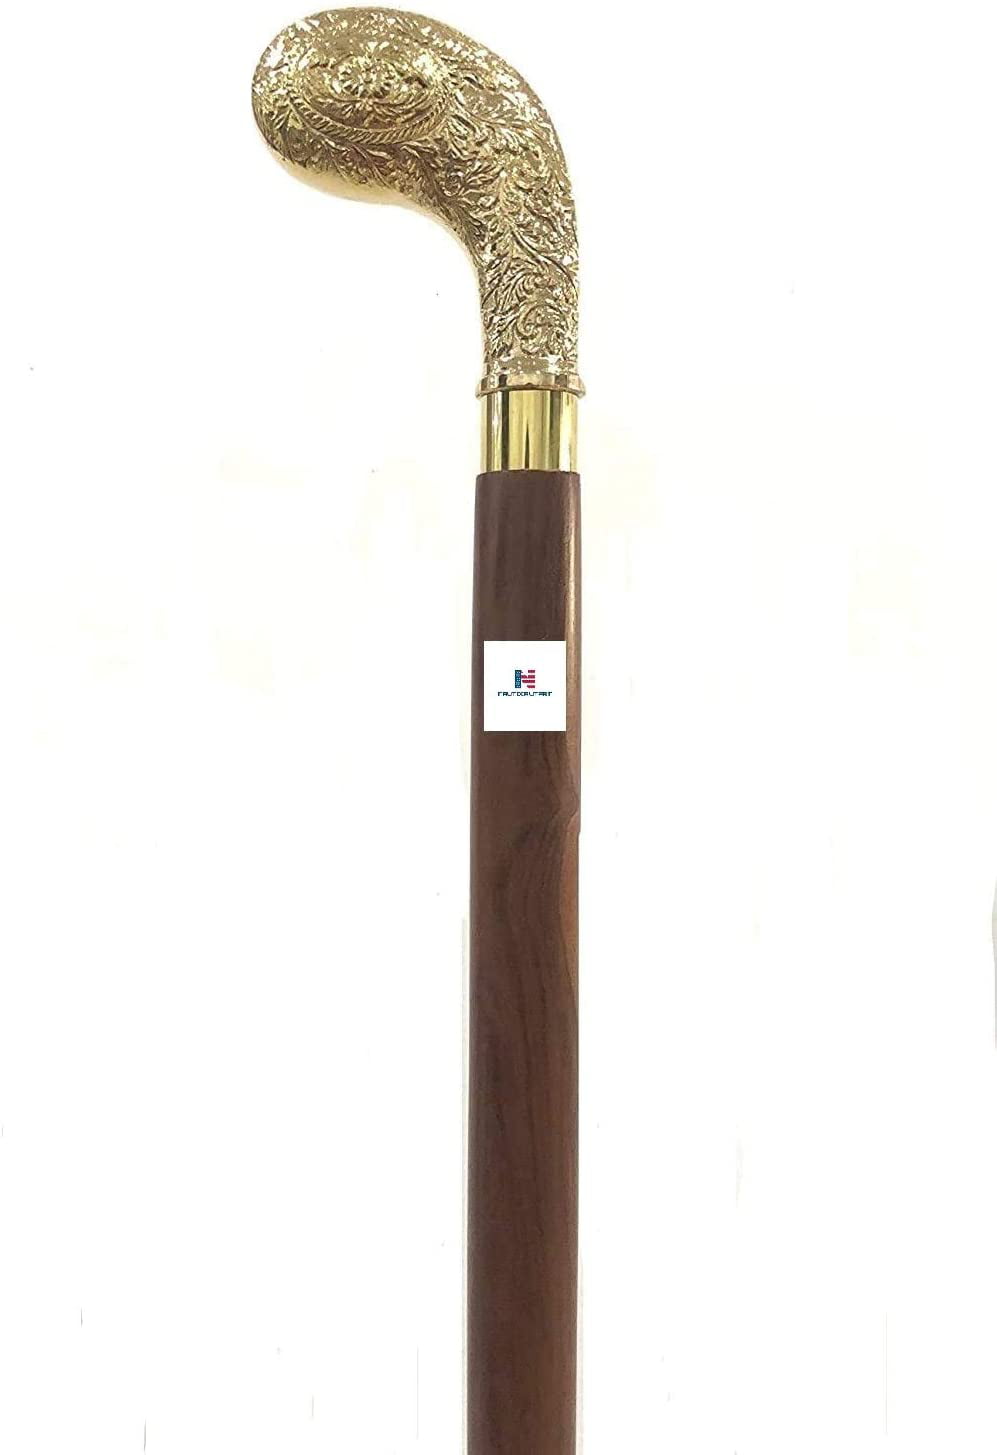 Designer Antique Brass Head Knob Handle Vintage Style For Walking Stick Cane 